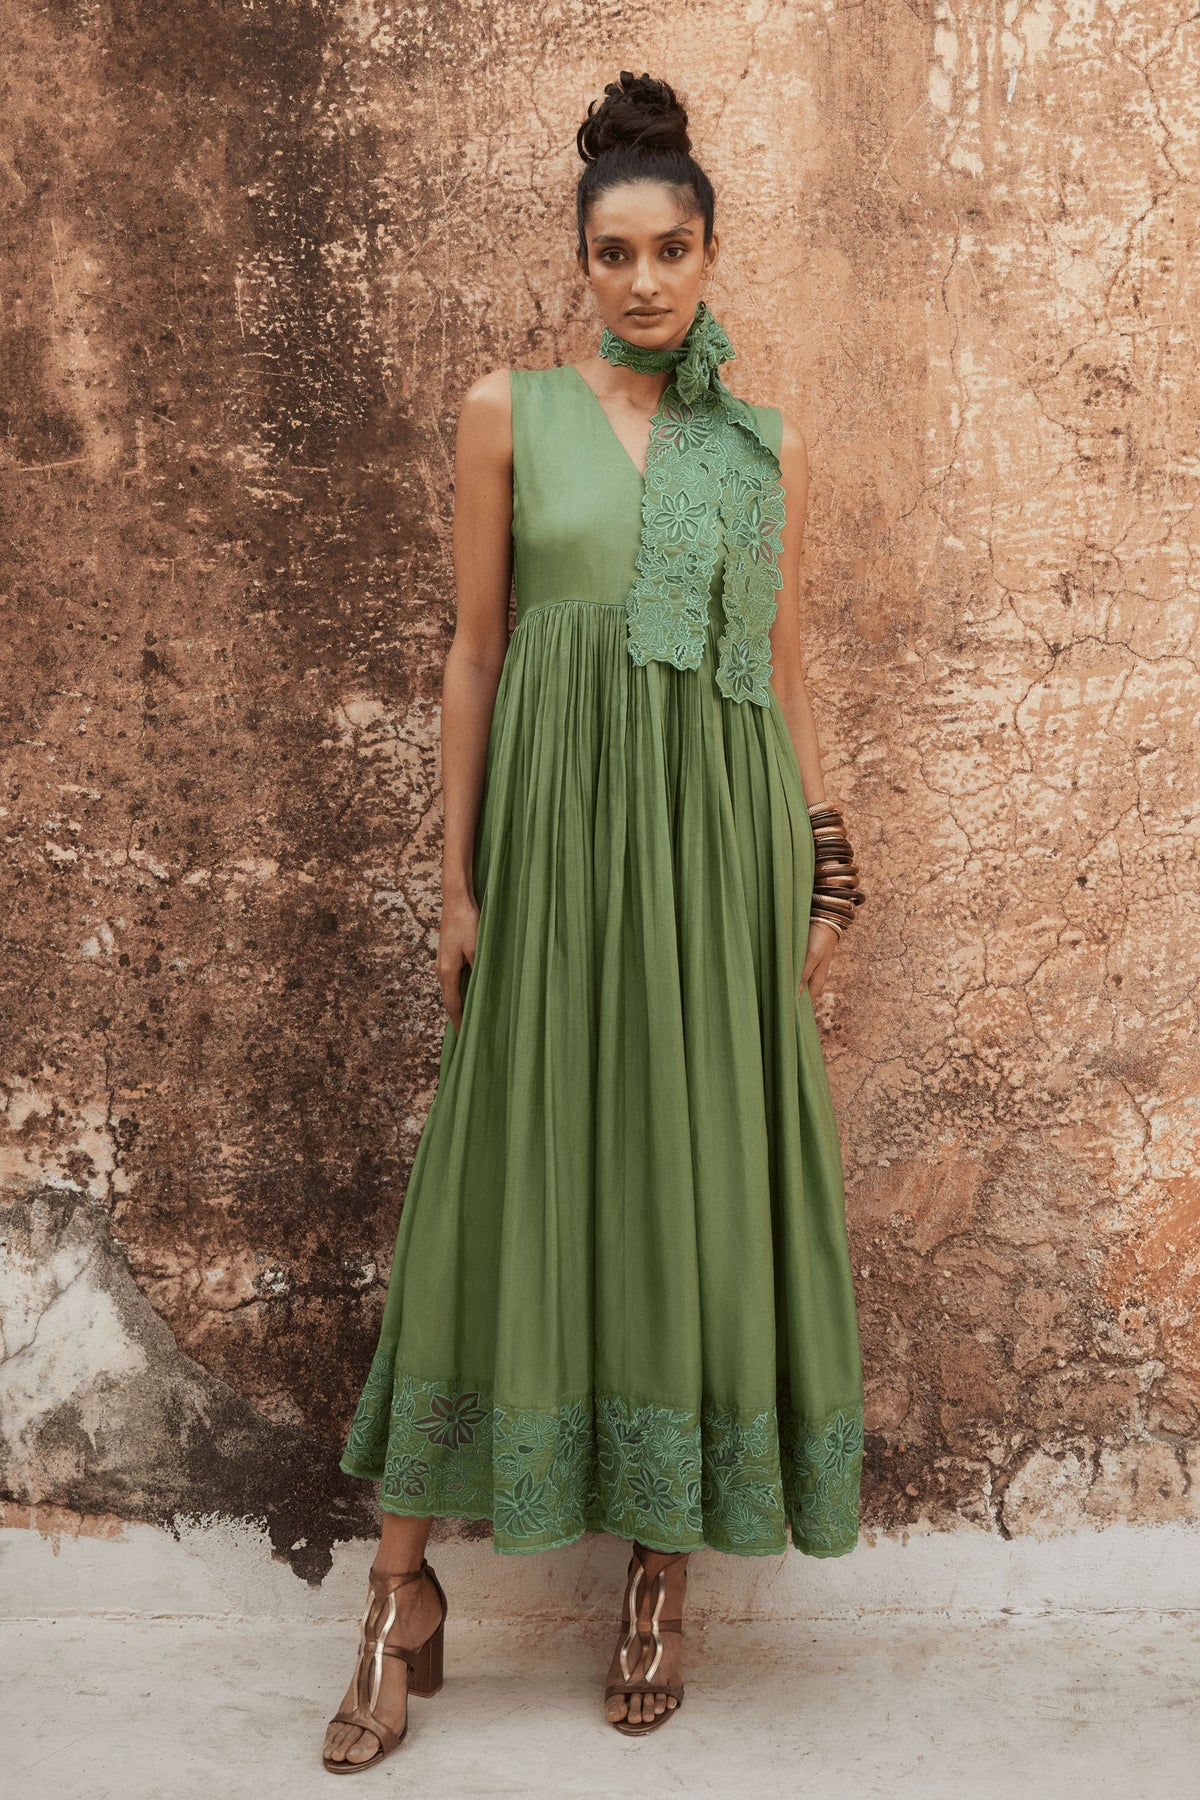 Chic Green Maxi Dress